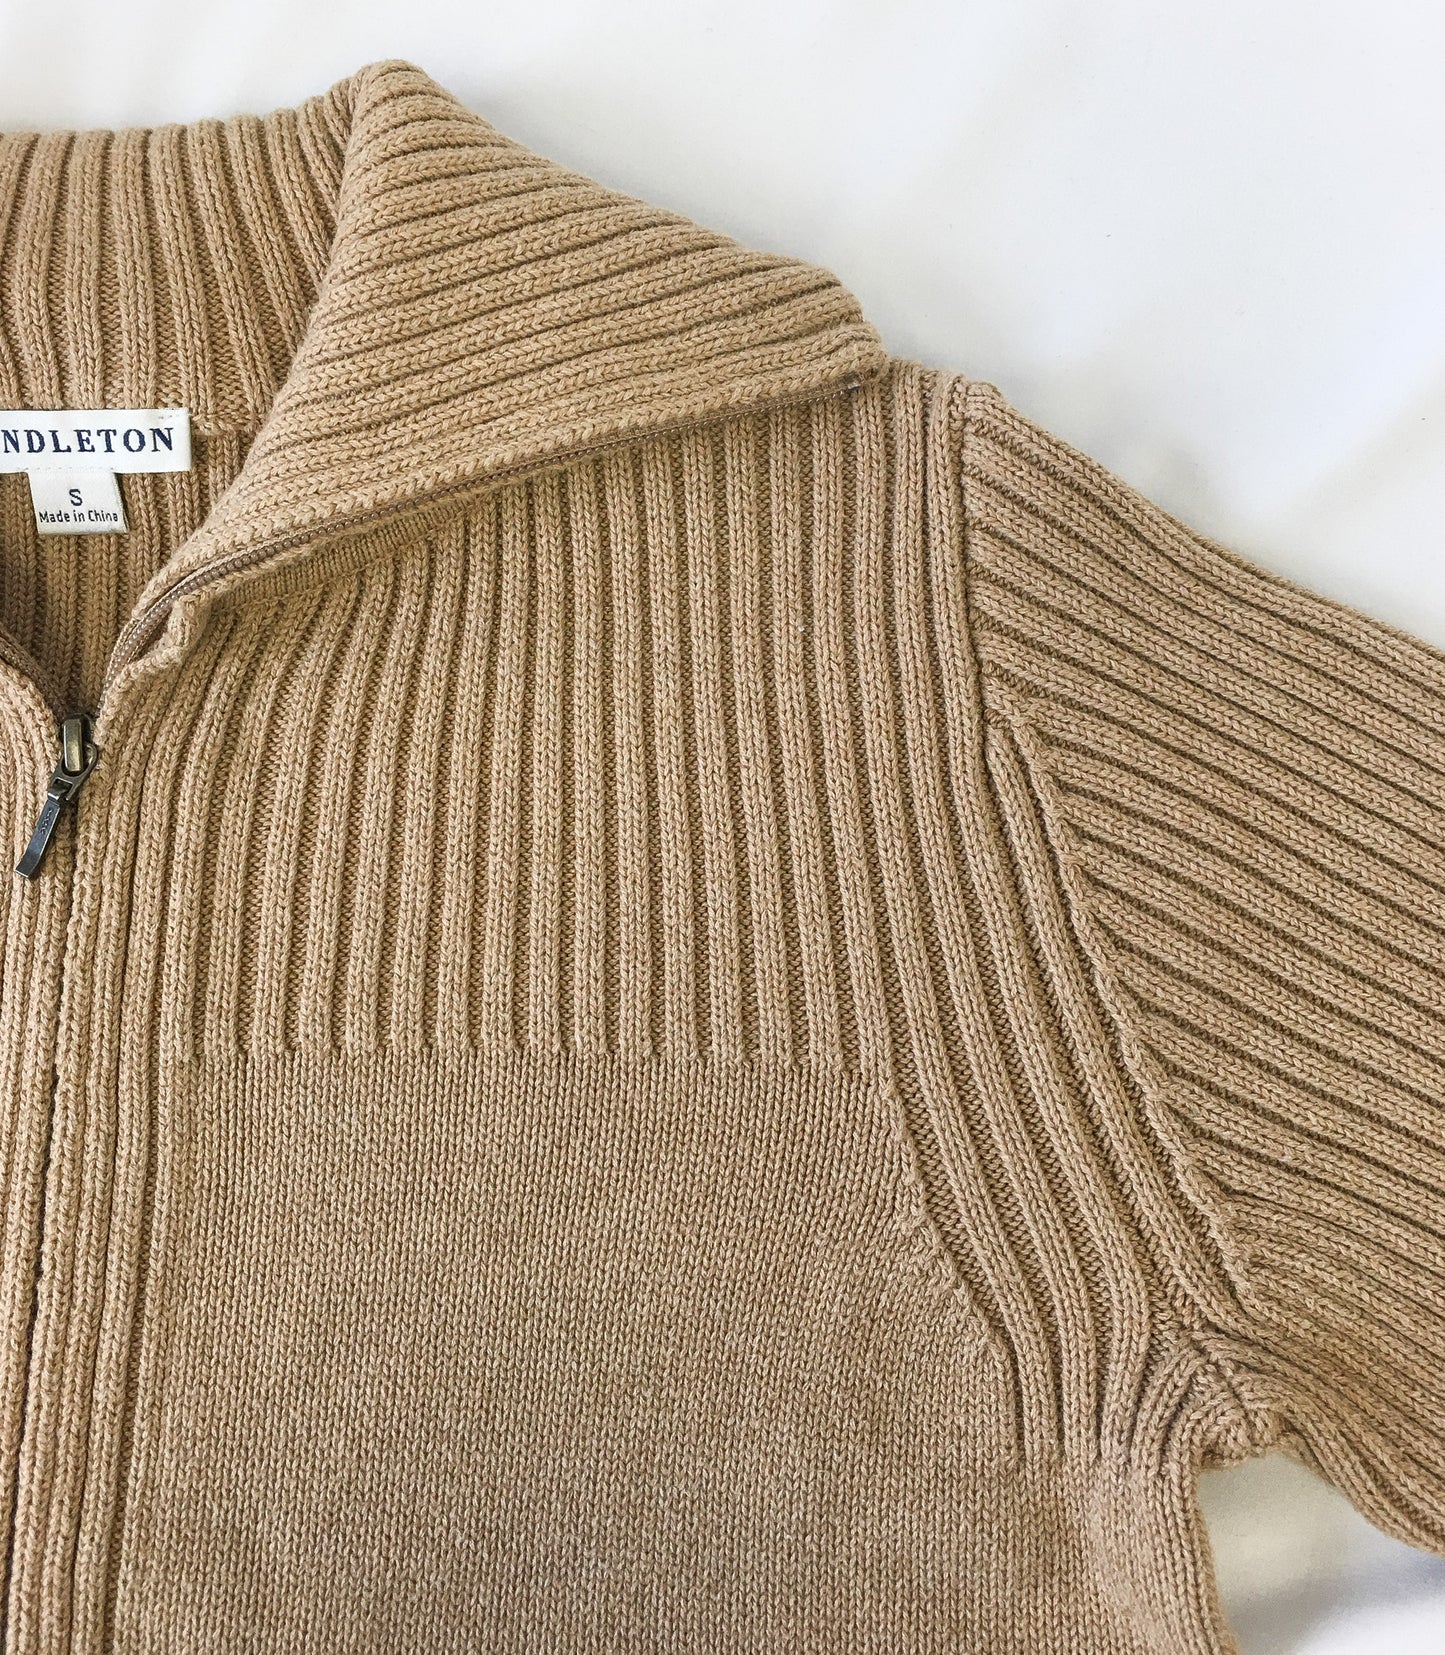 Pendleton Tan/Light Brown Knit Full-Zip Sweater, Sz. S